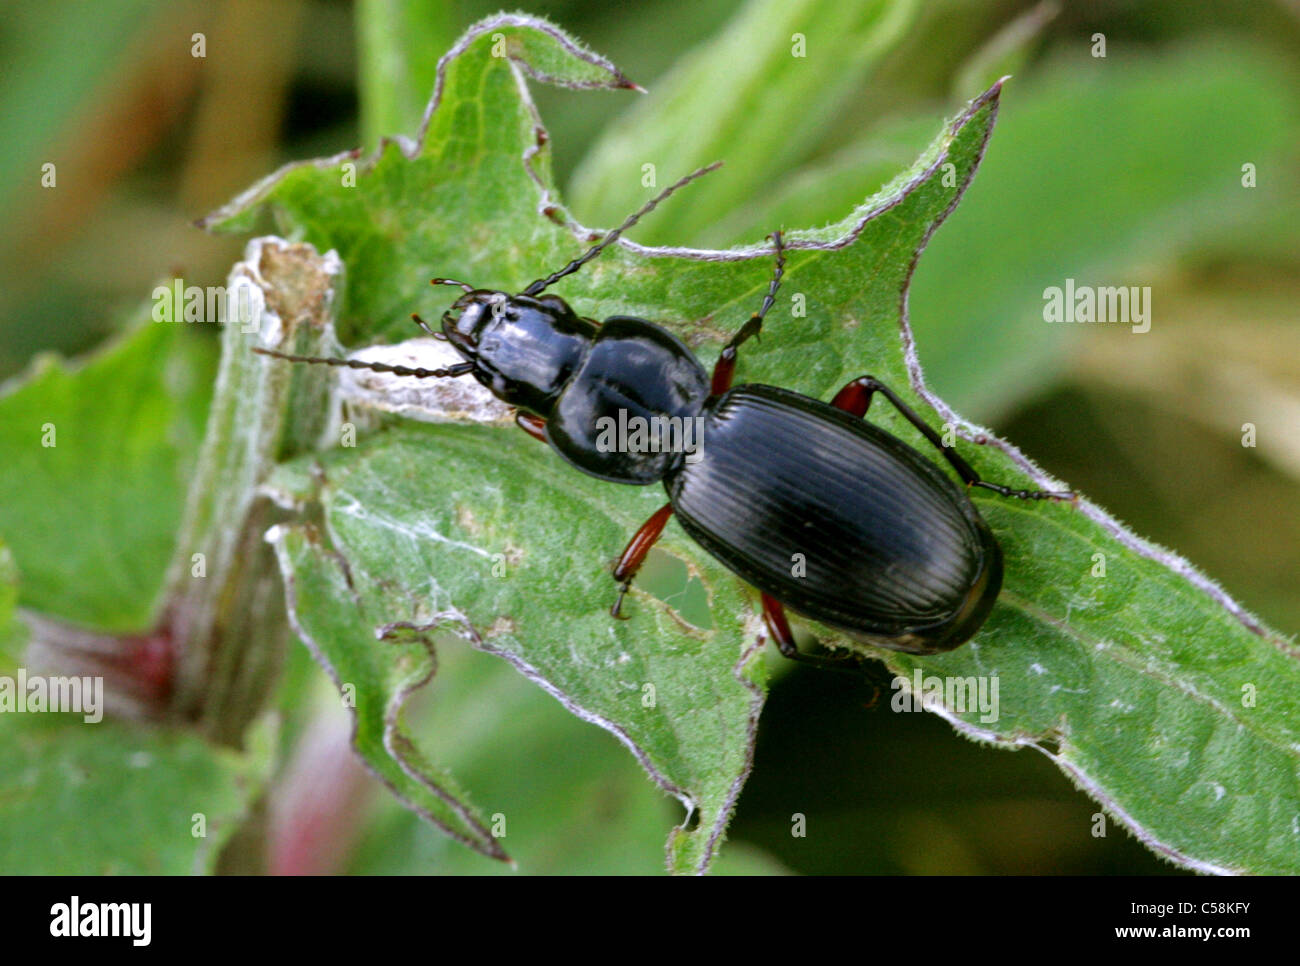 Red-legged Black Clock Beetle, Pterostichus madidus var. concinnus, Carabinae, Carabidae, Coleoptera. Stock Photo